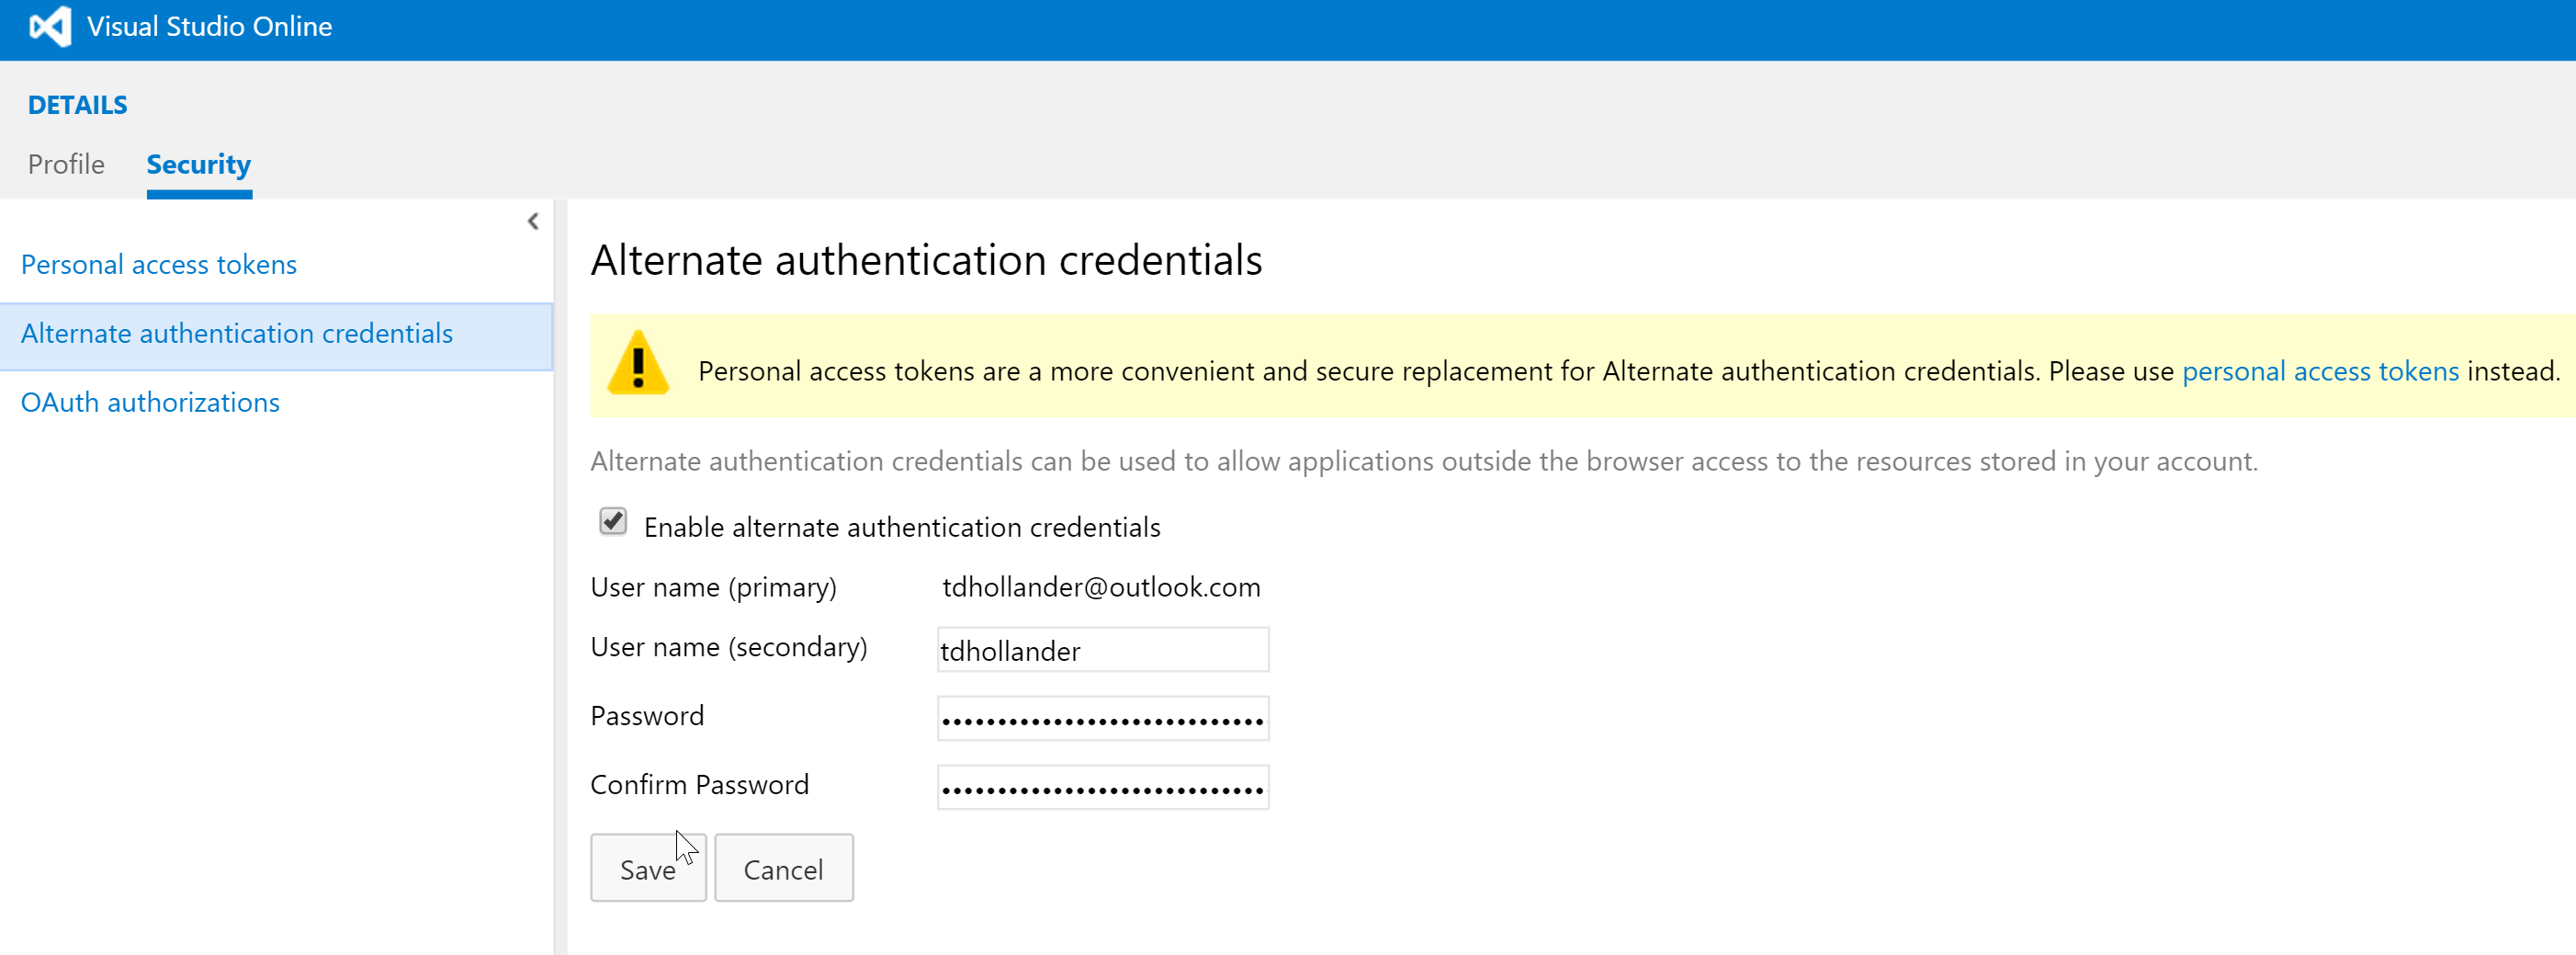 Menu Alternate authentication credentials